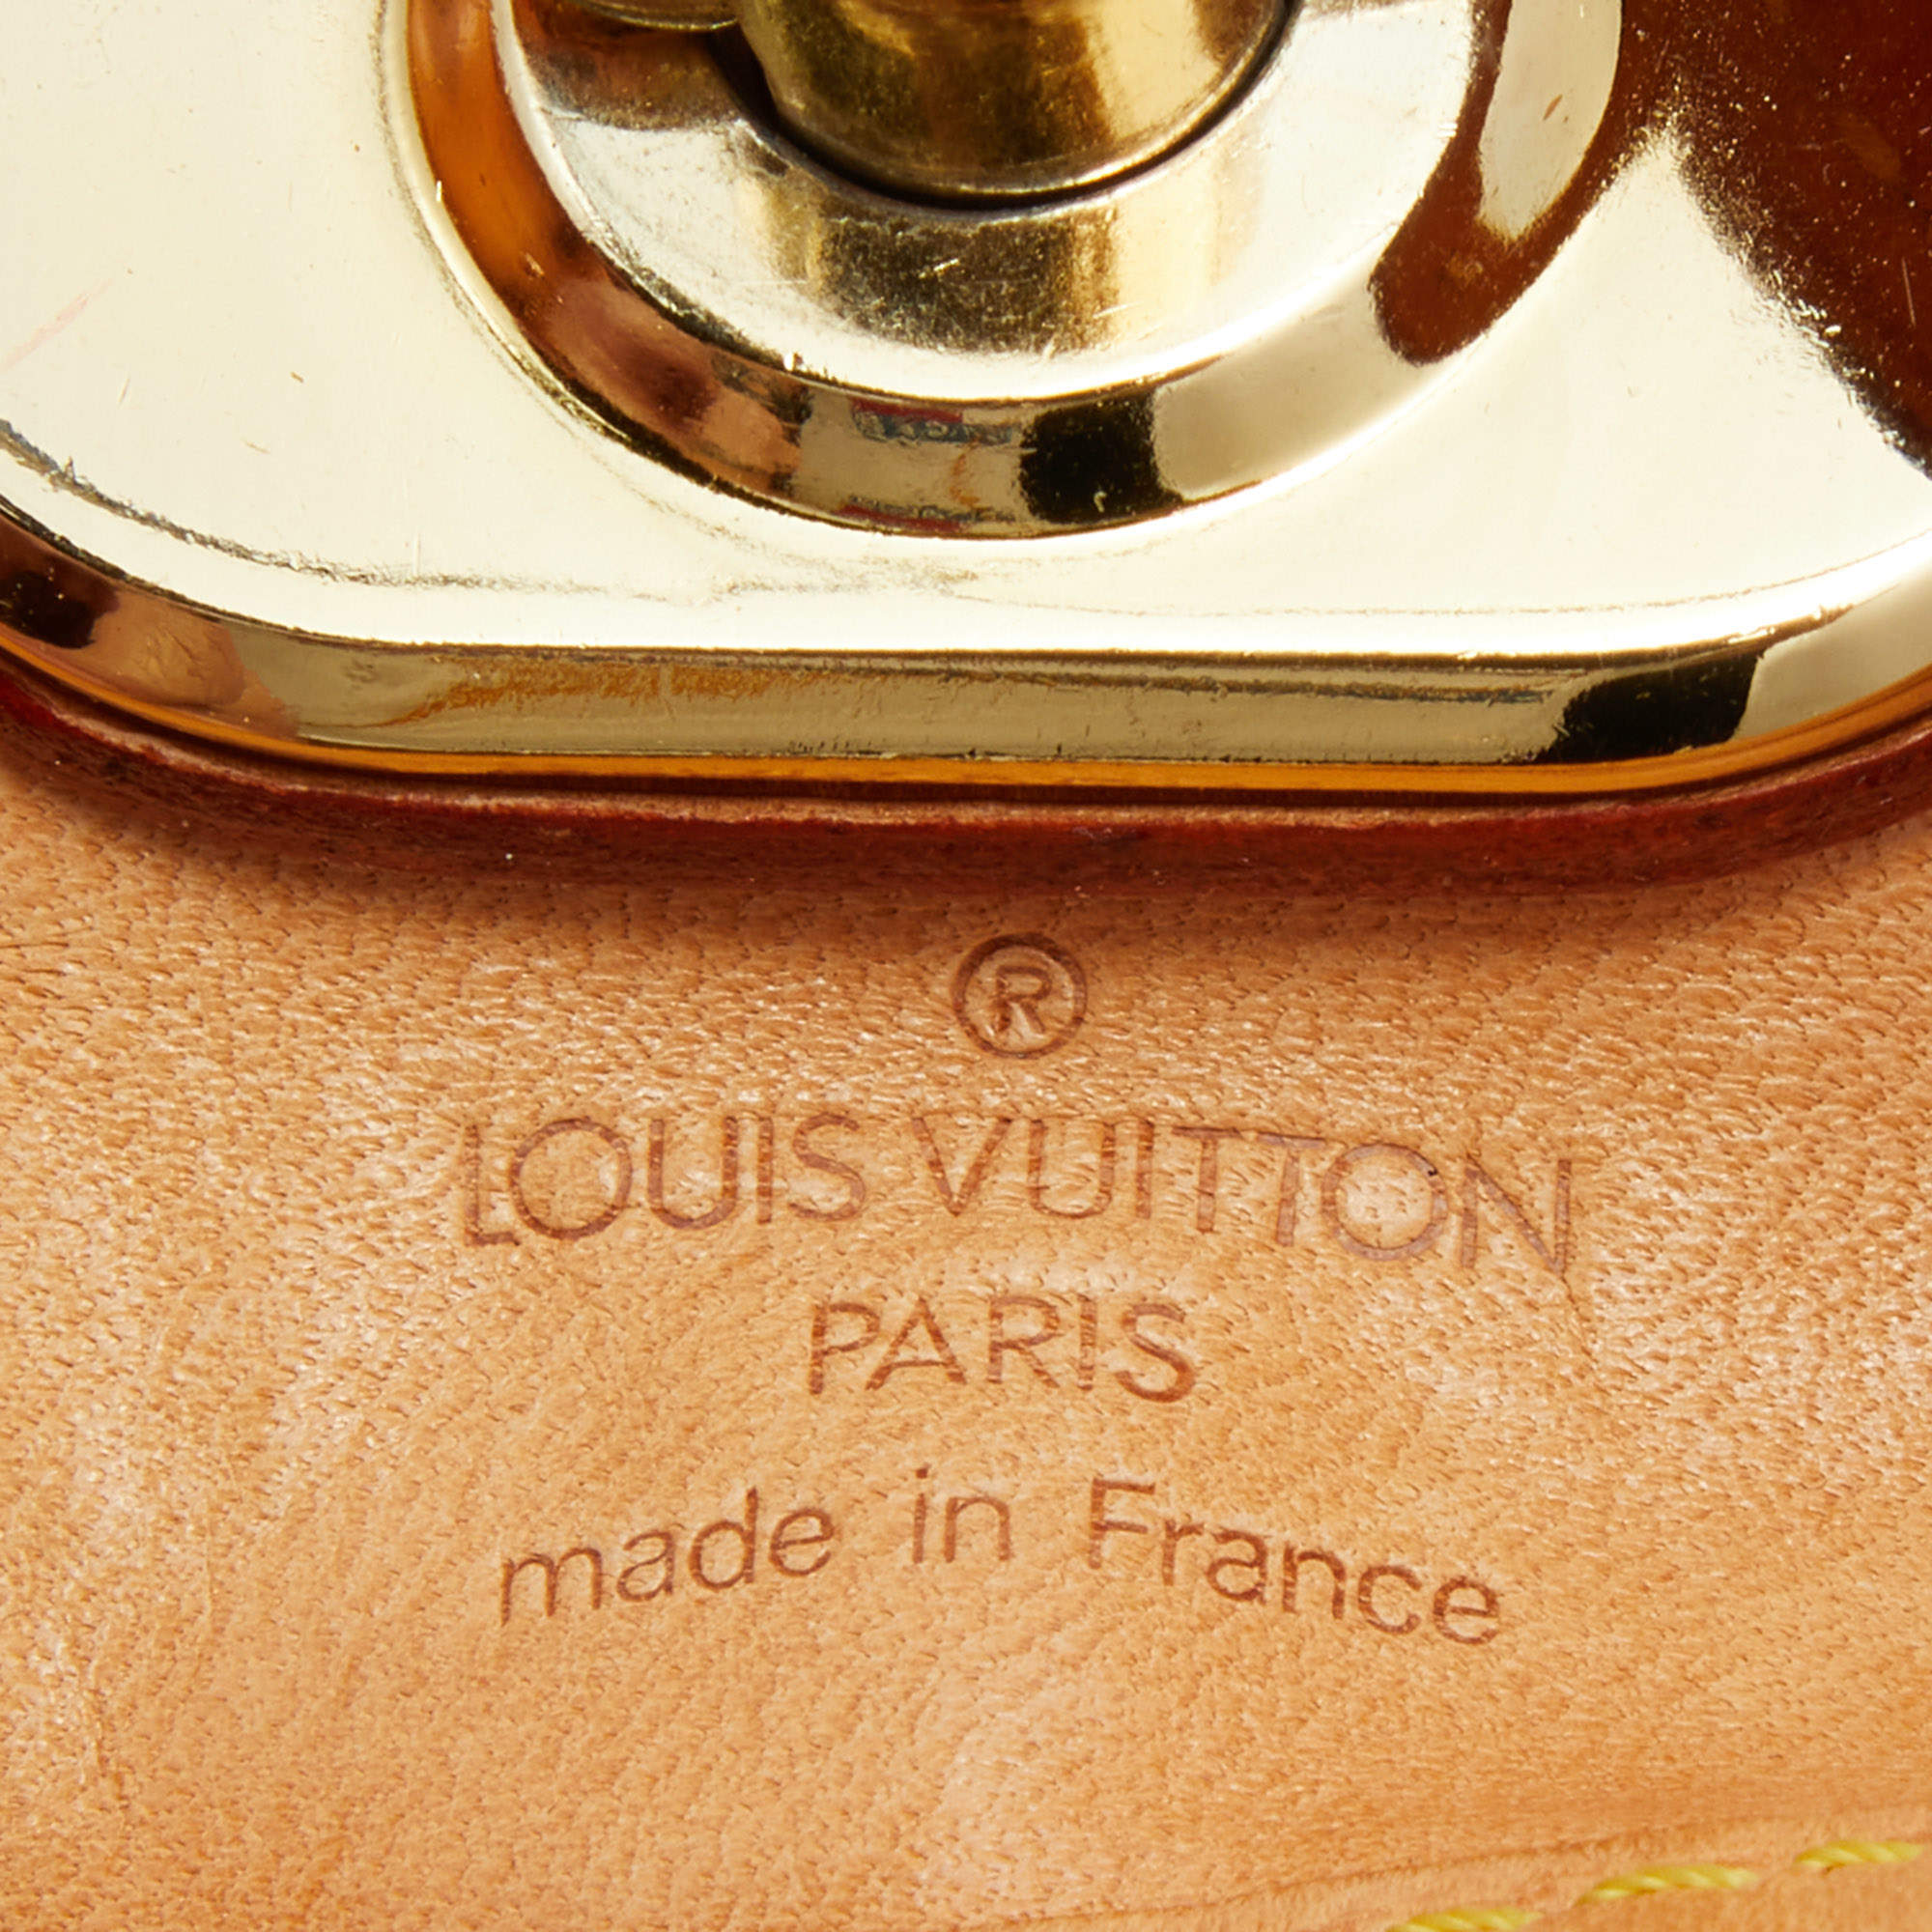 LOUIS VUITTON Monogram Garment Cover 1275442